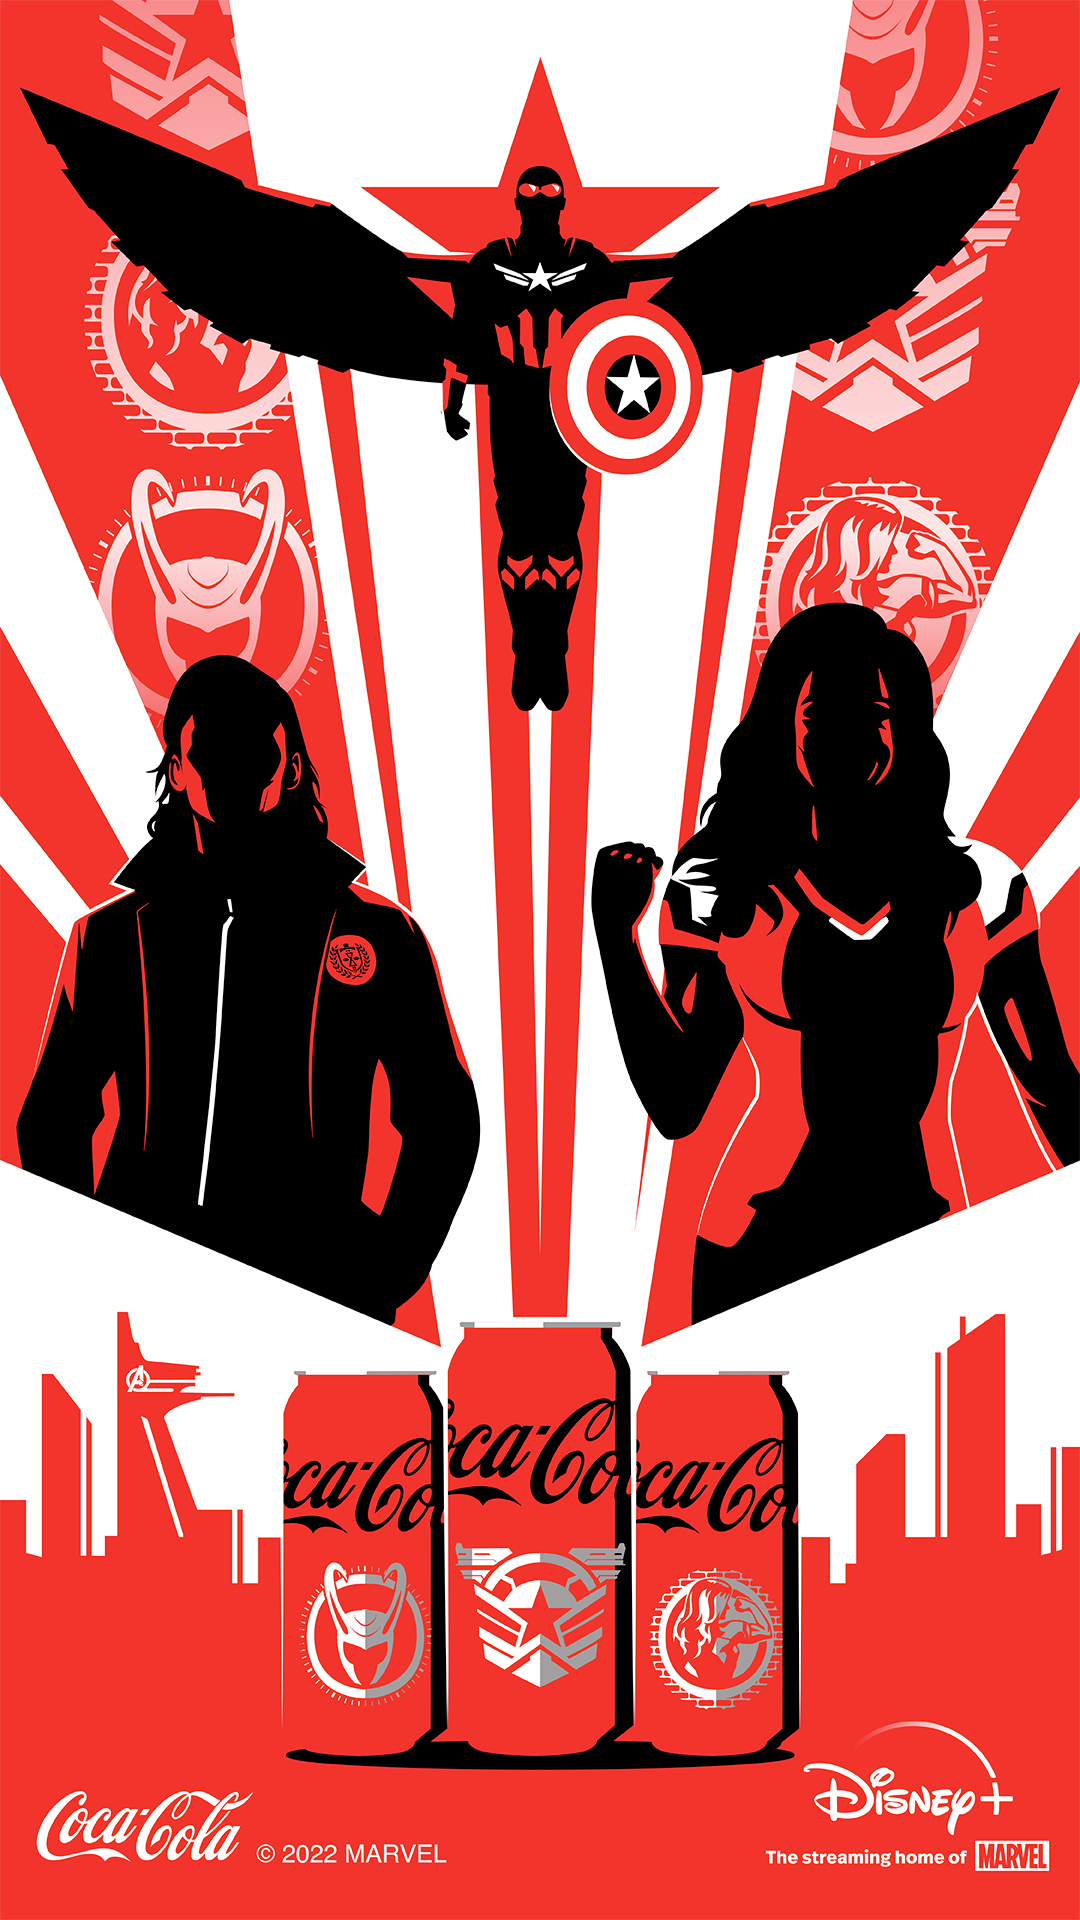 Artwork by Marvel/ Coca Cola: Avengers Collaboration-Rewards